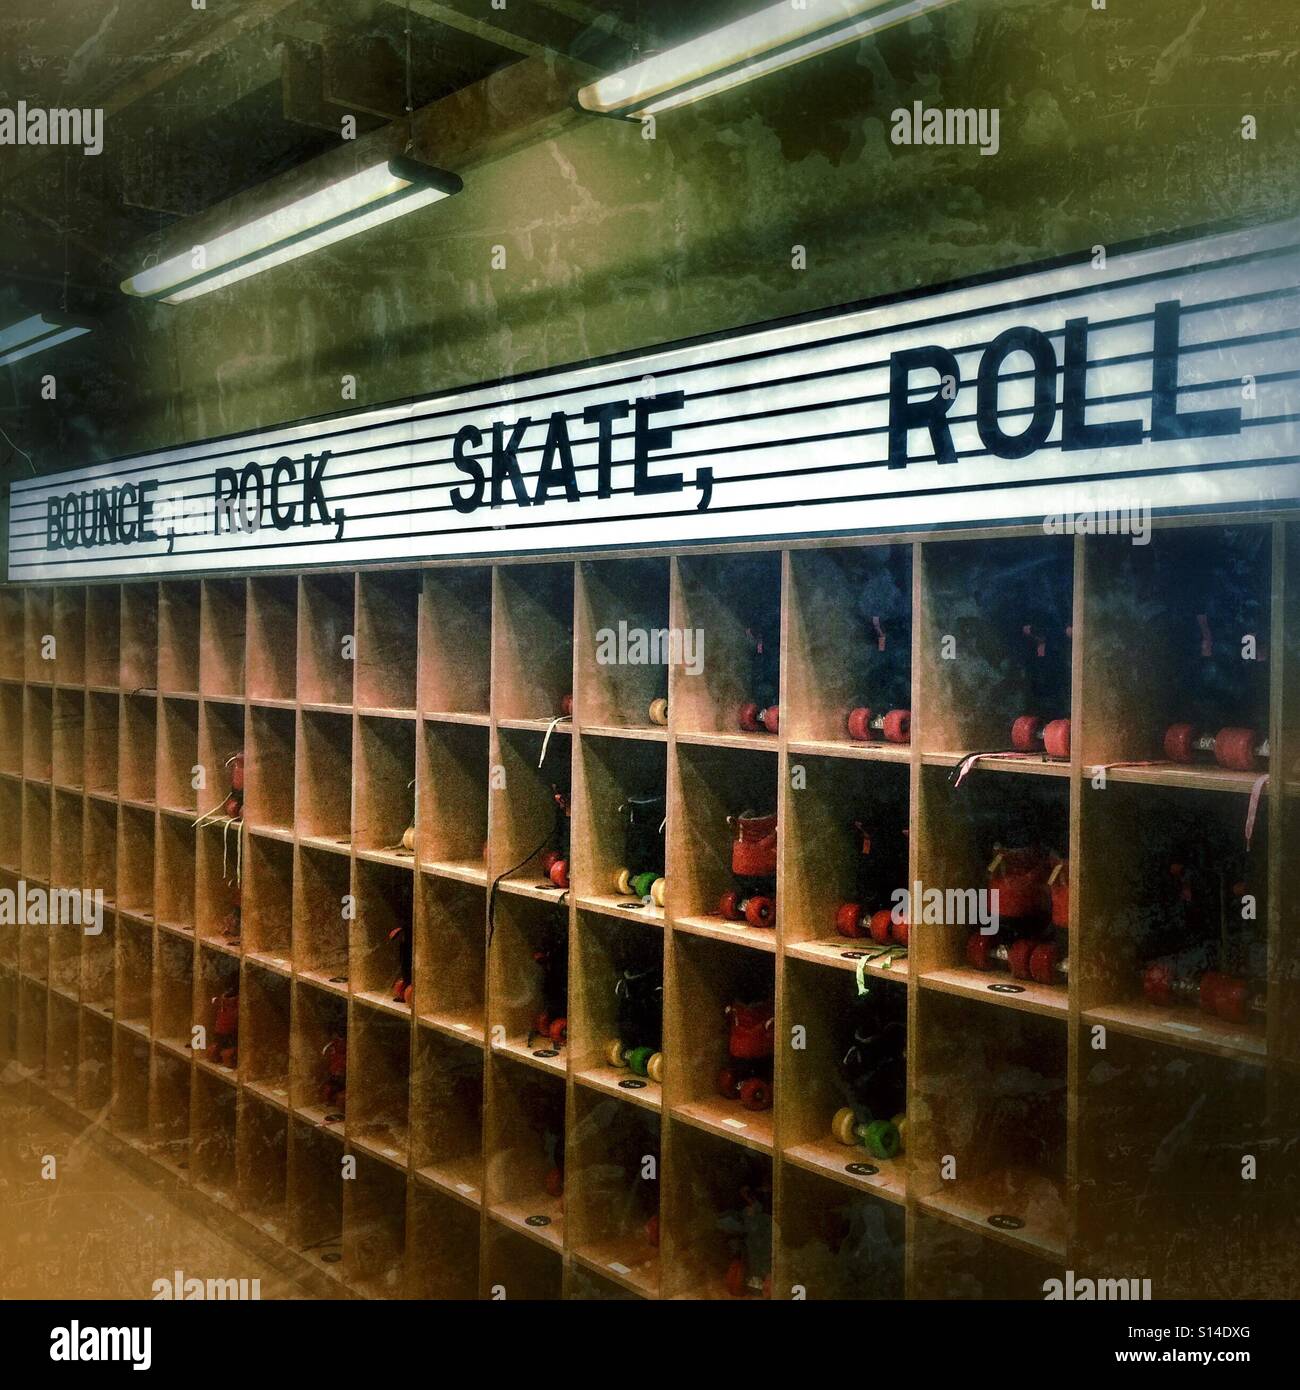 Bounce Rock Skate Roll - Dreamland Margate roller disco interior Stock  Photo - Alamy